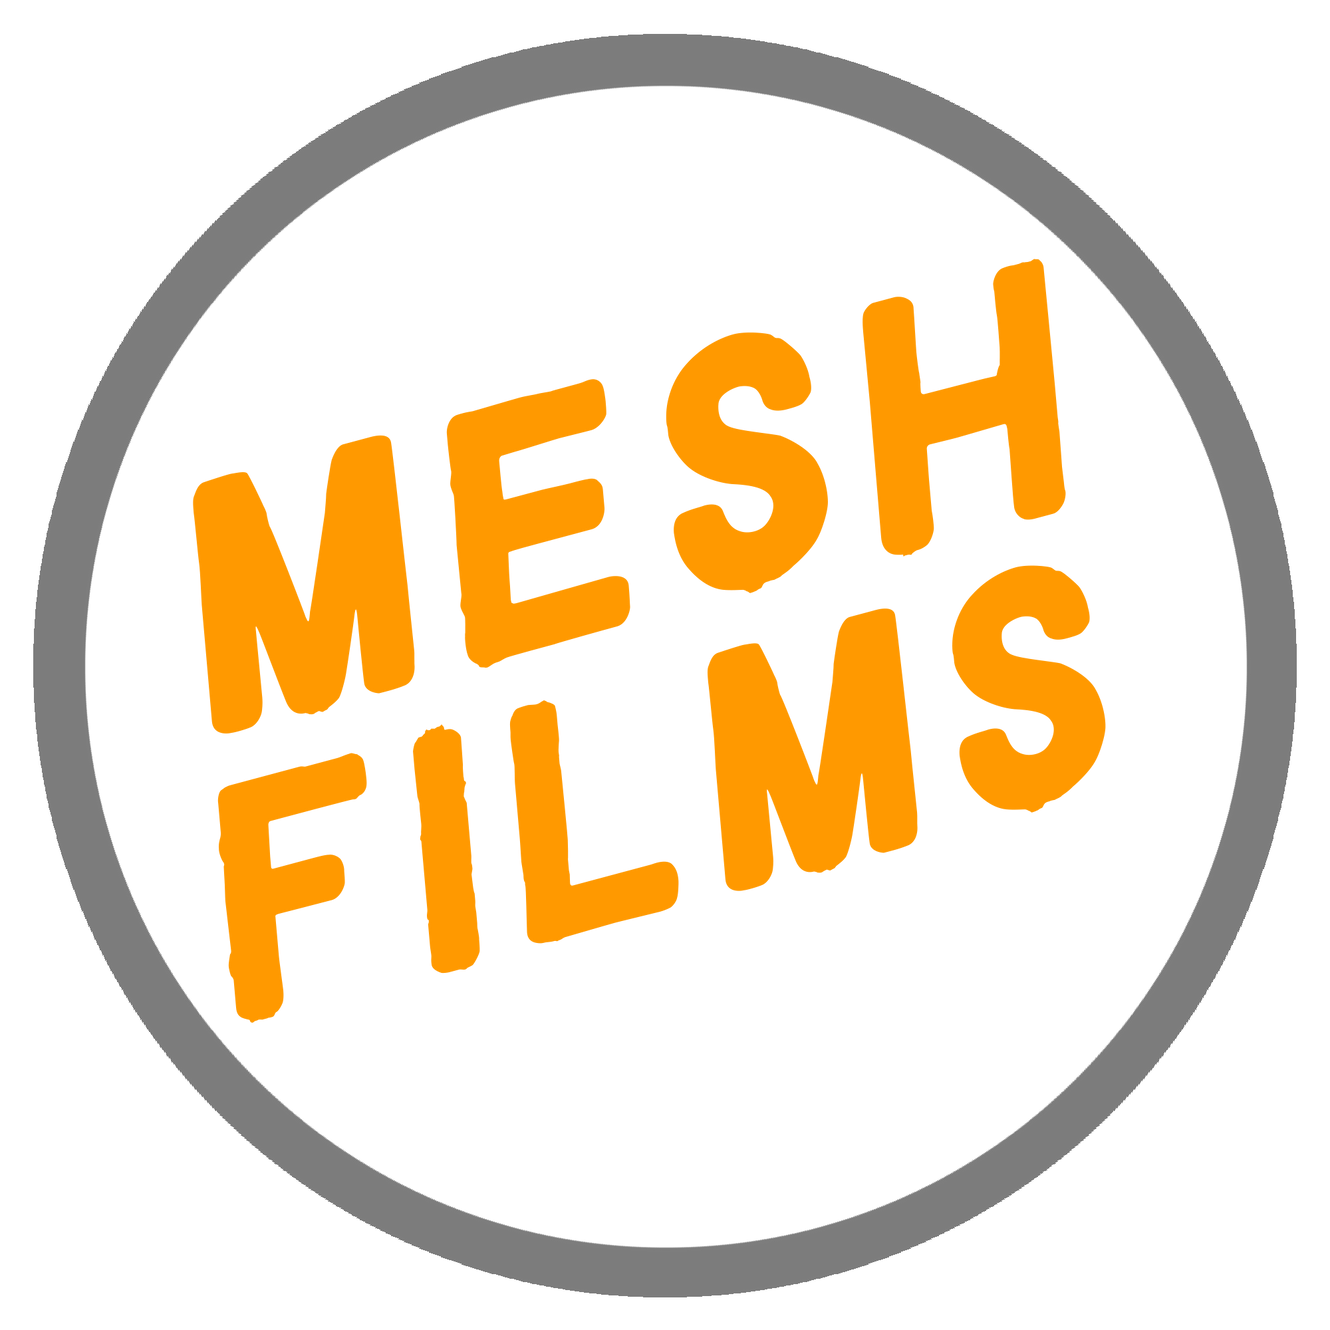 Mesh Films